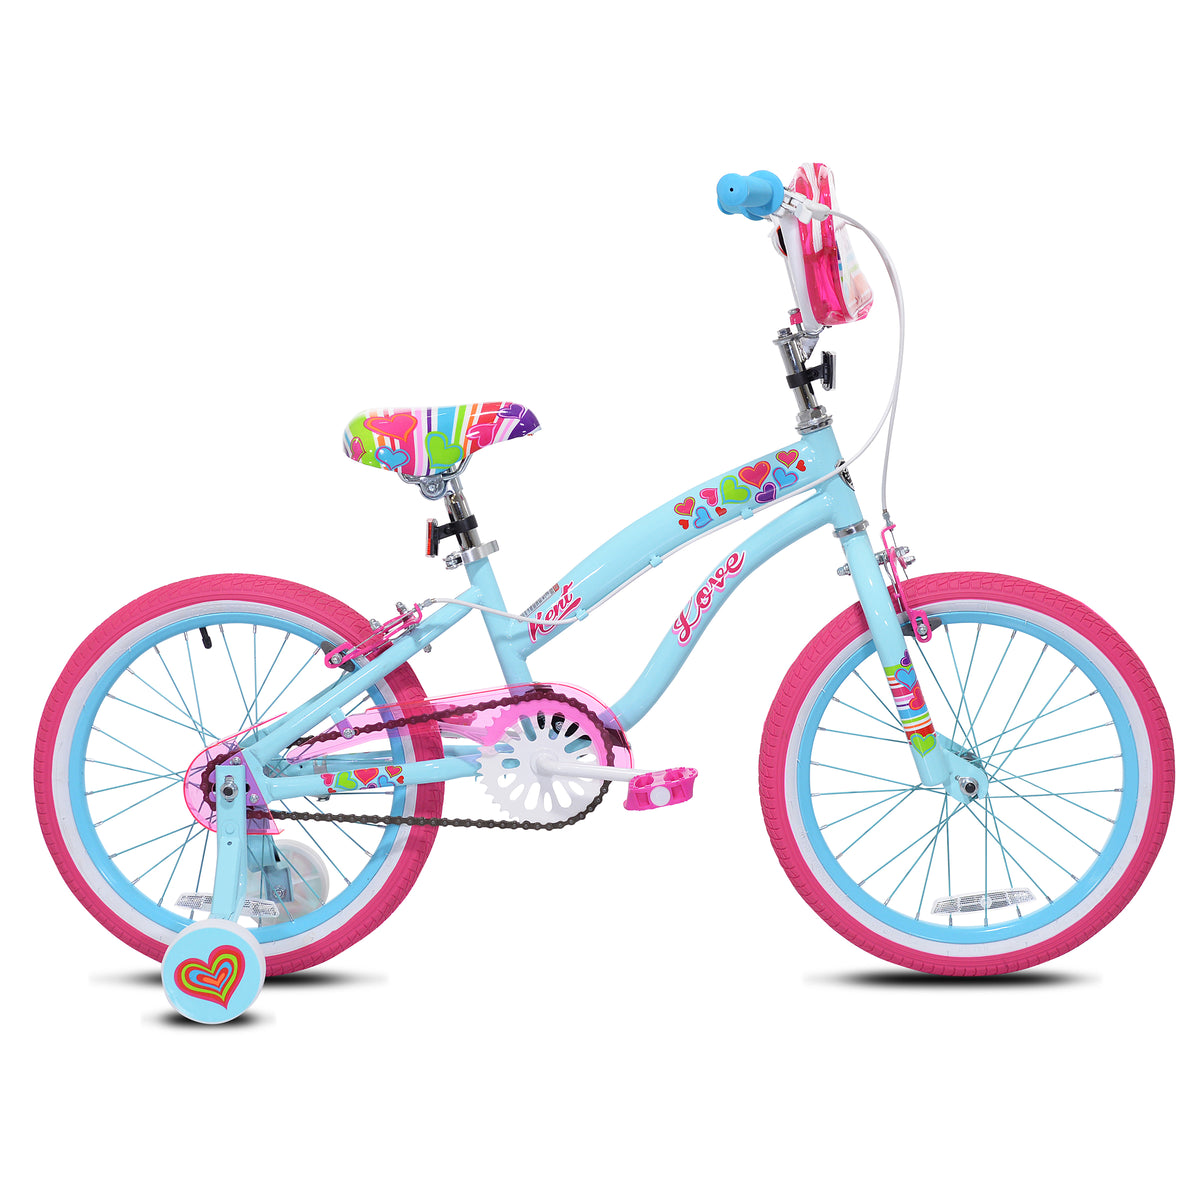 18" Kent Love | Cruiser Bike for Kids Ages 5-8